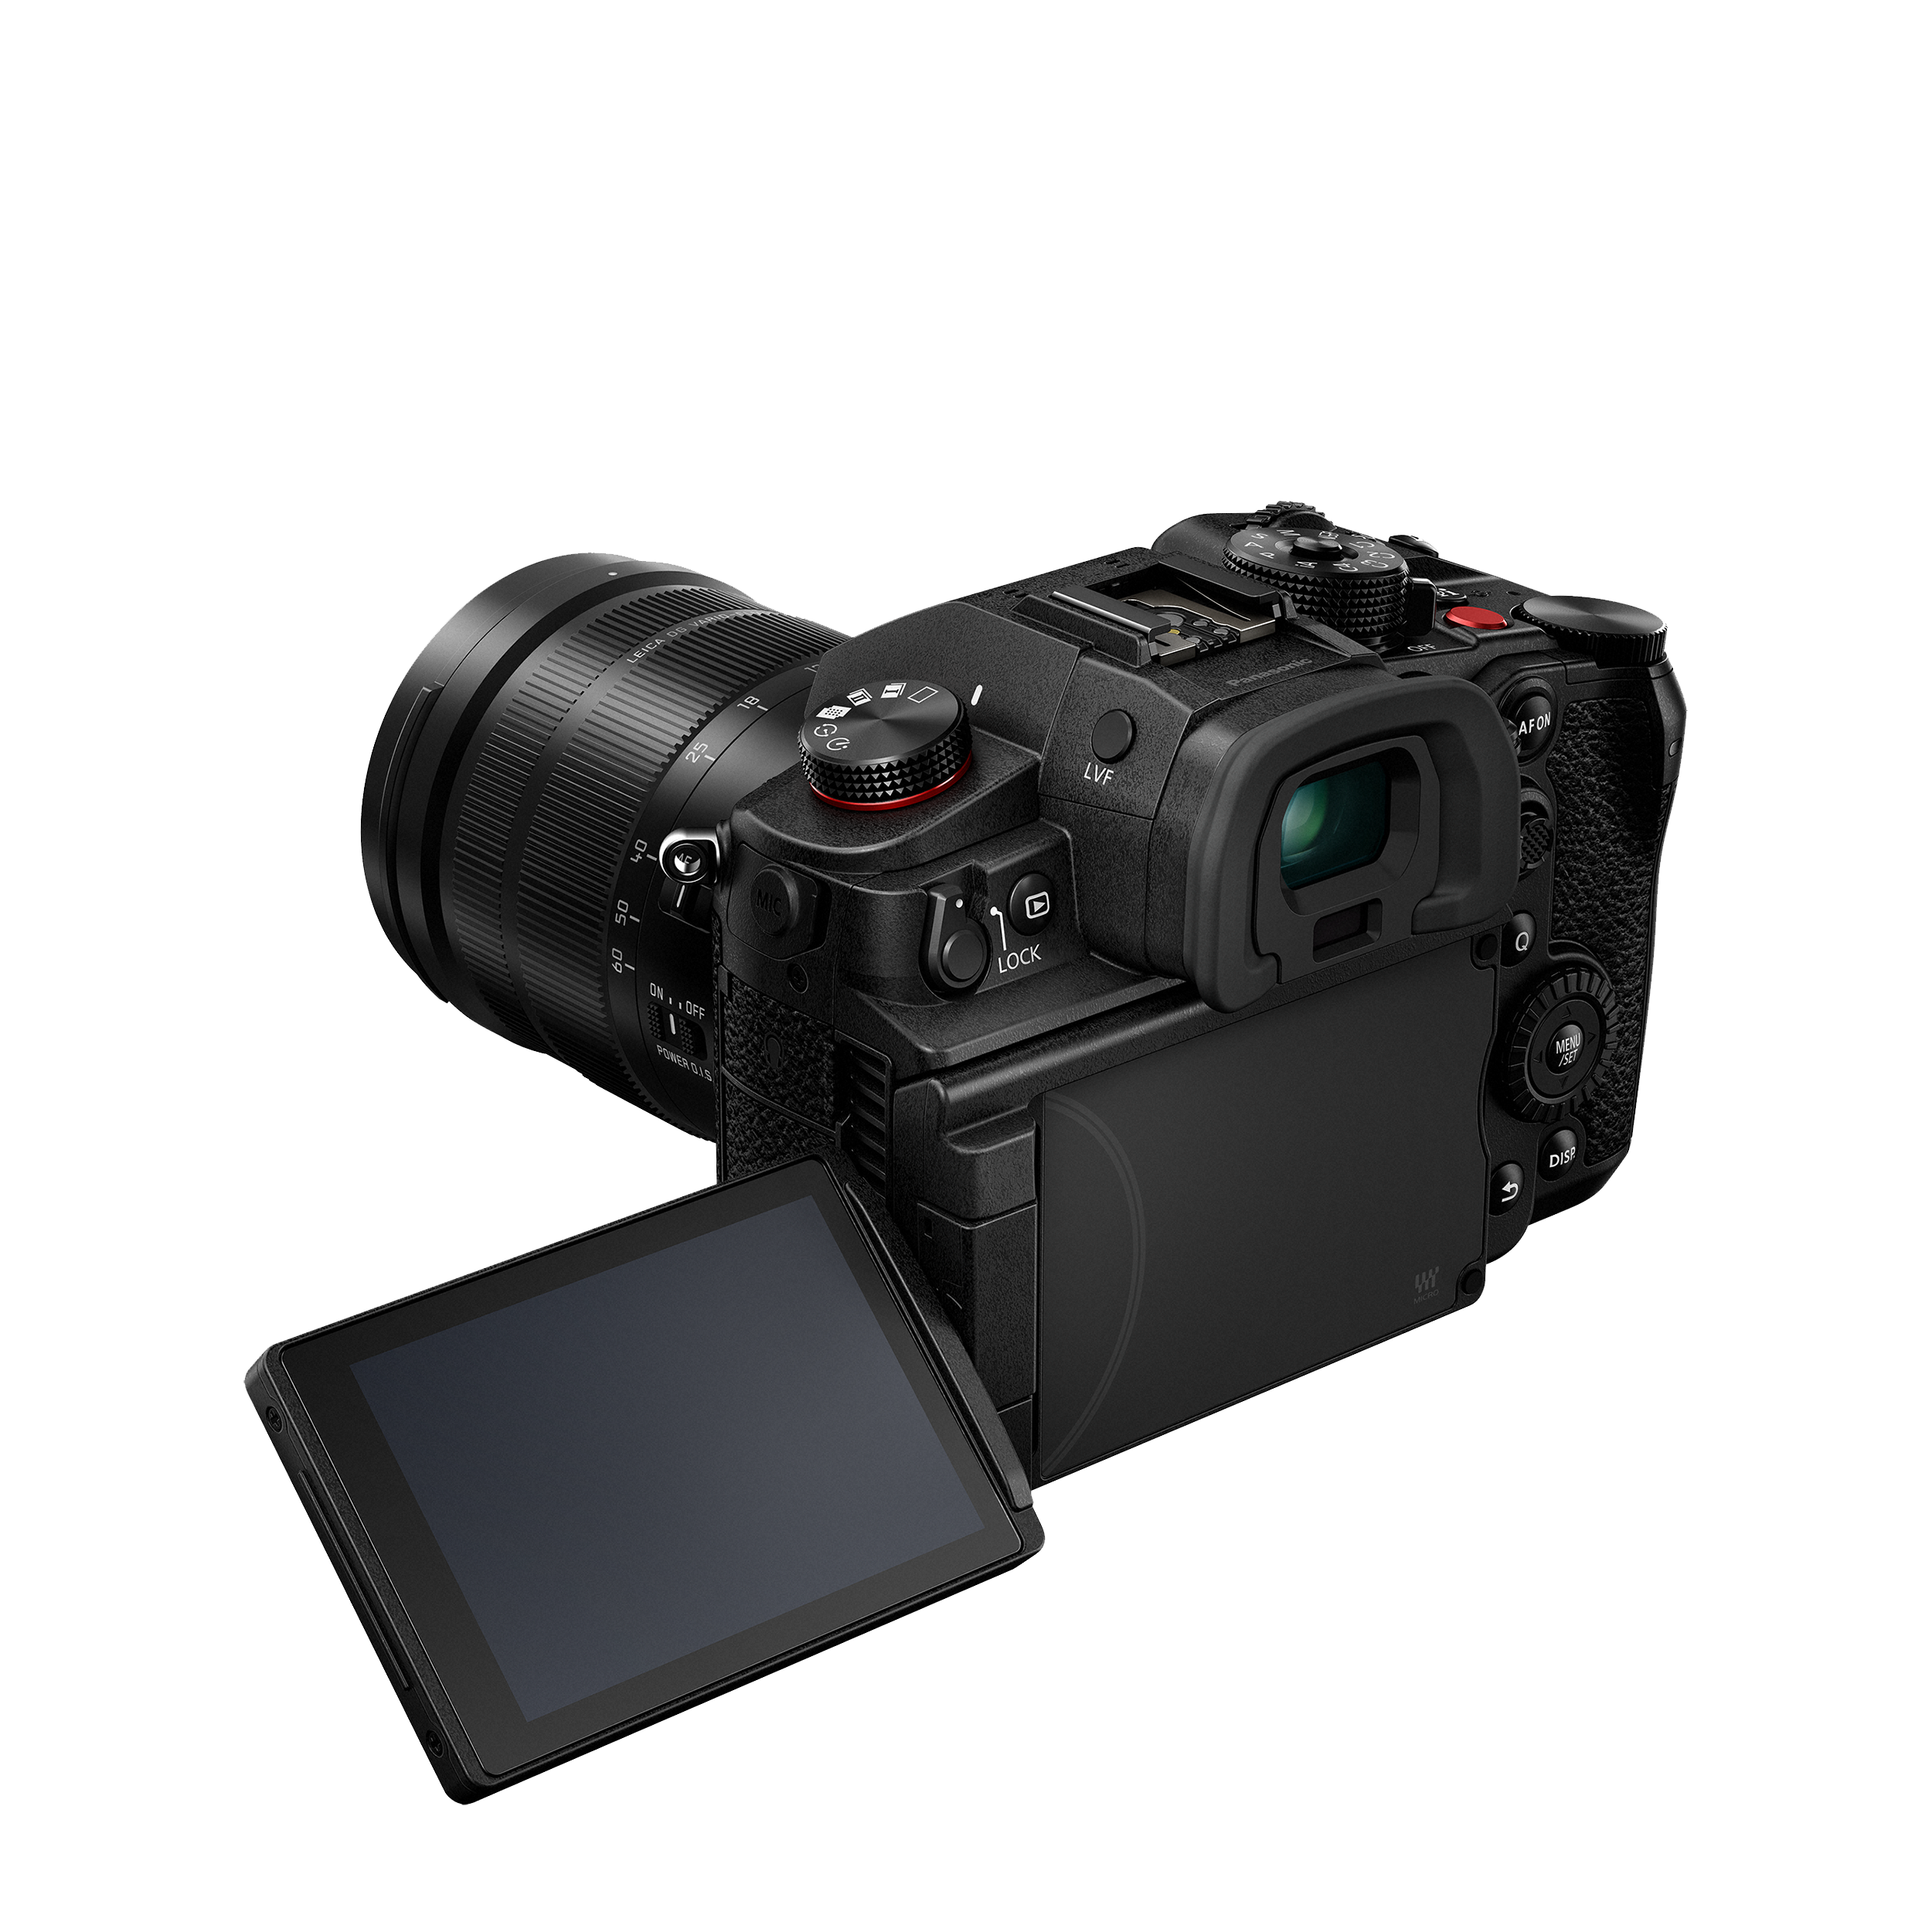 Panasonic Lumix GH6 Mirrorless Camera - 12-60mm lens Kit